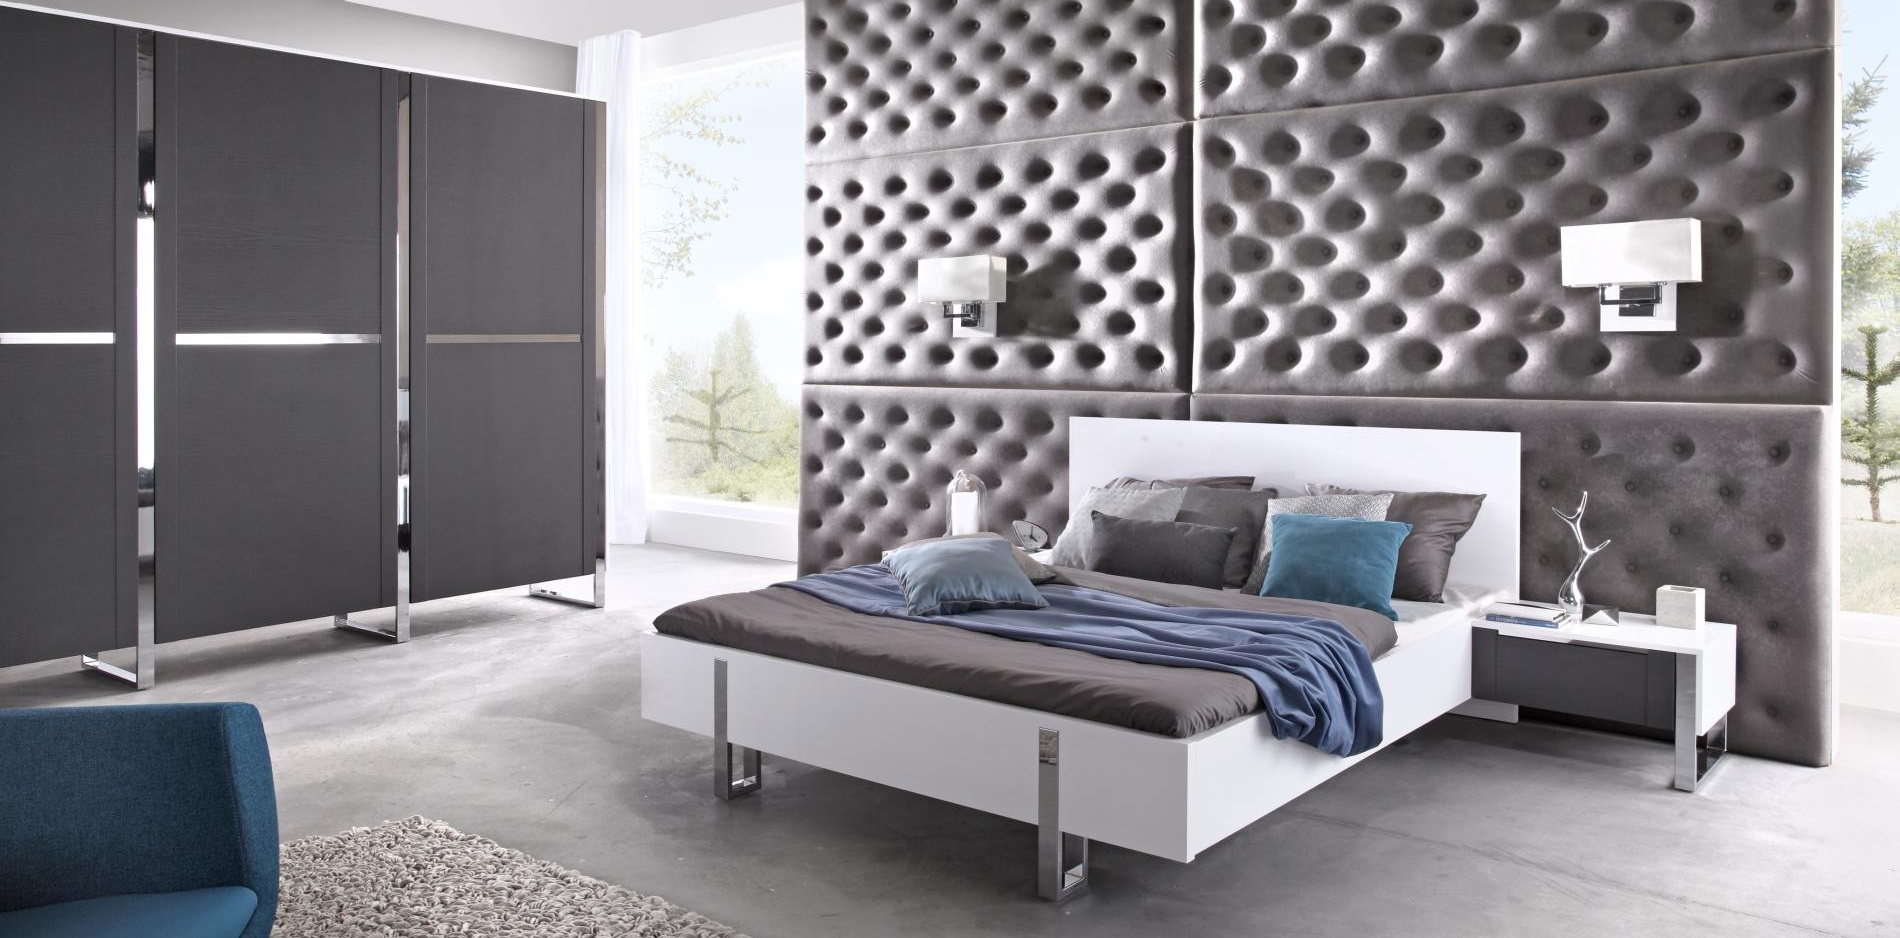 Artvision komplet mebli do sypialni szara ściana białe łóżko szara szafa